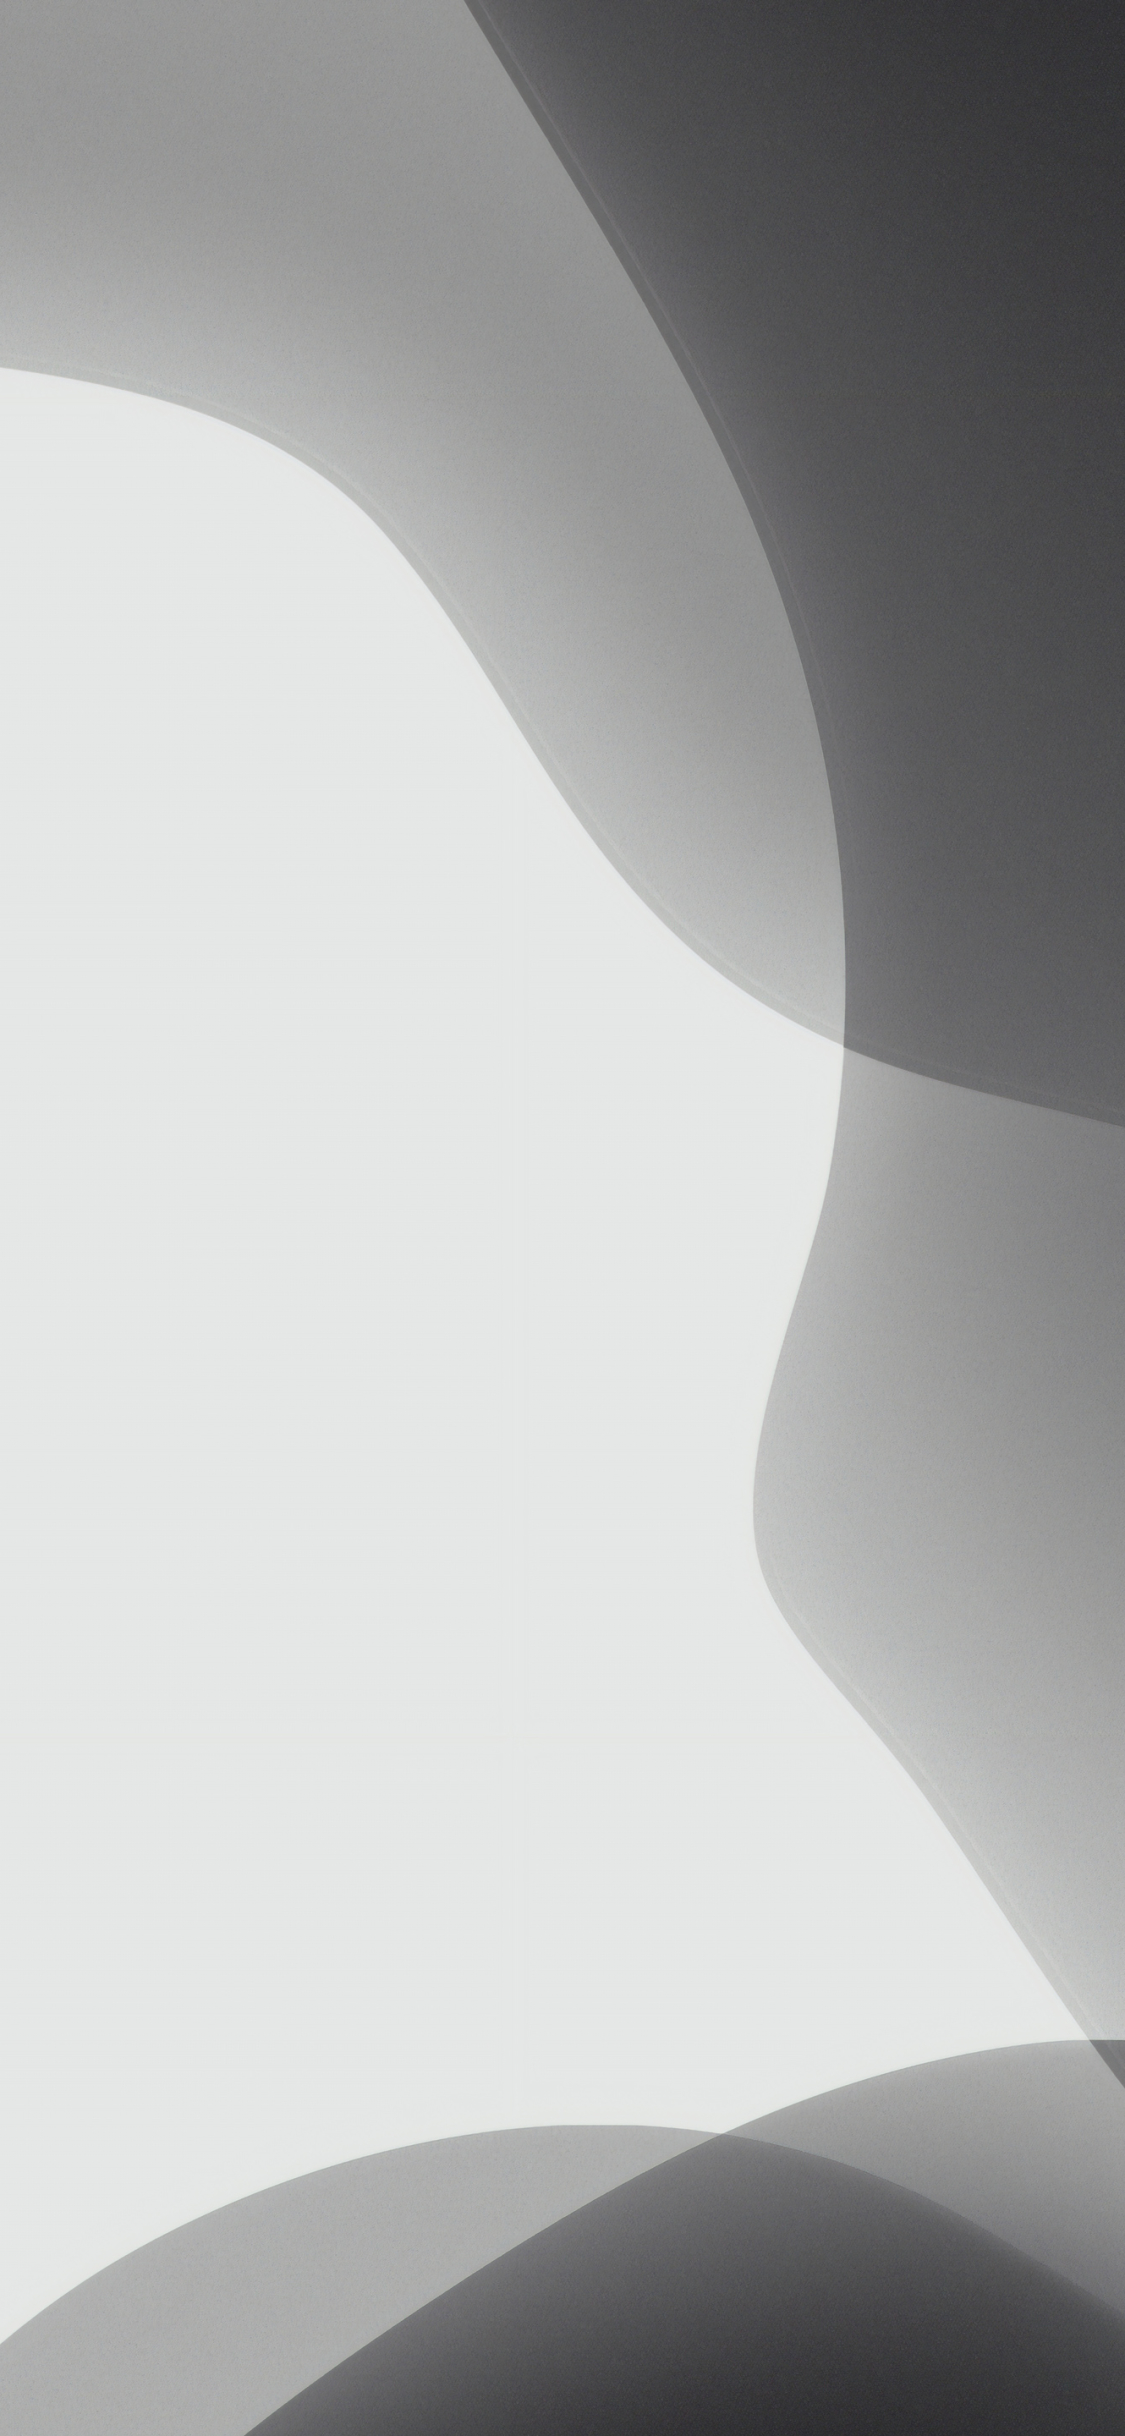 iPhone 12 Wallpaper 4K, iOS 14, WWDC, 2020, iPadOS, Dark